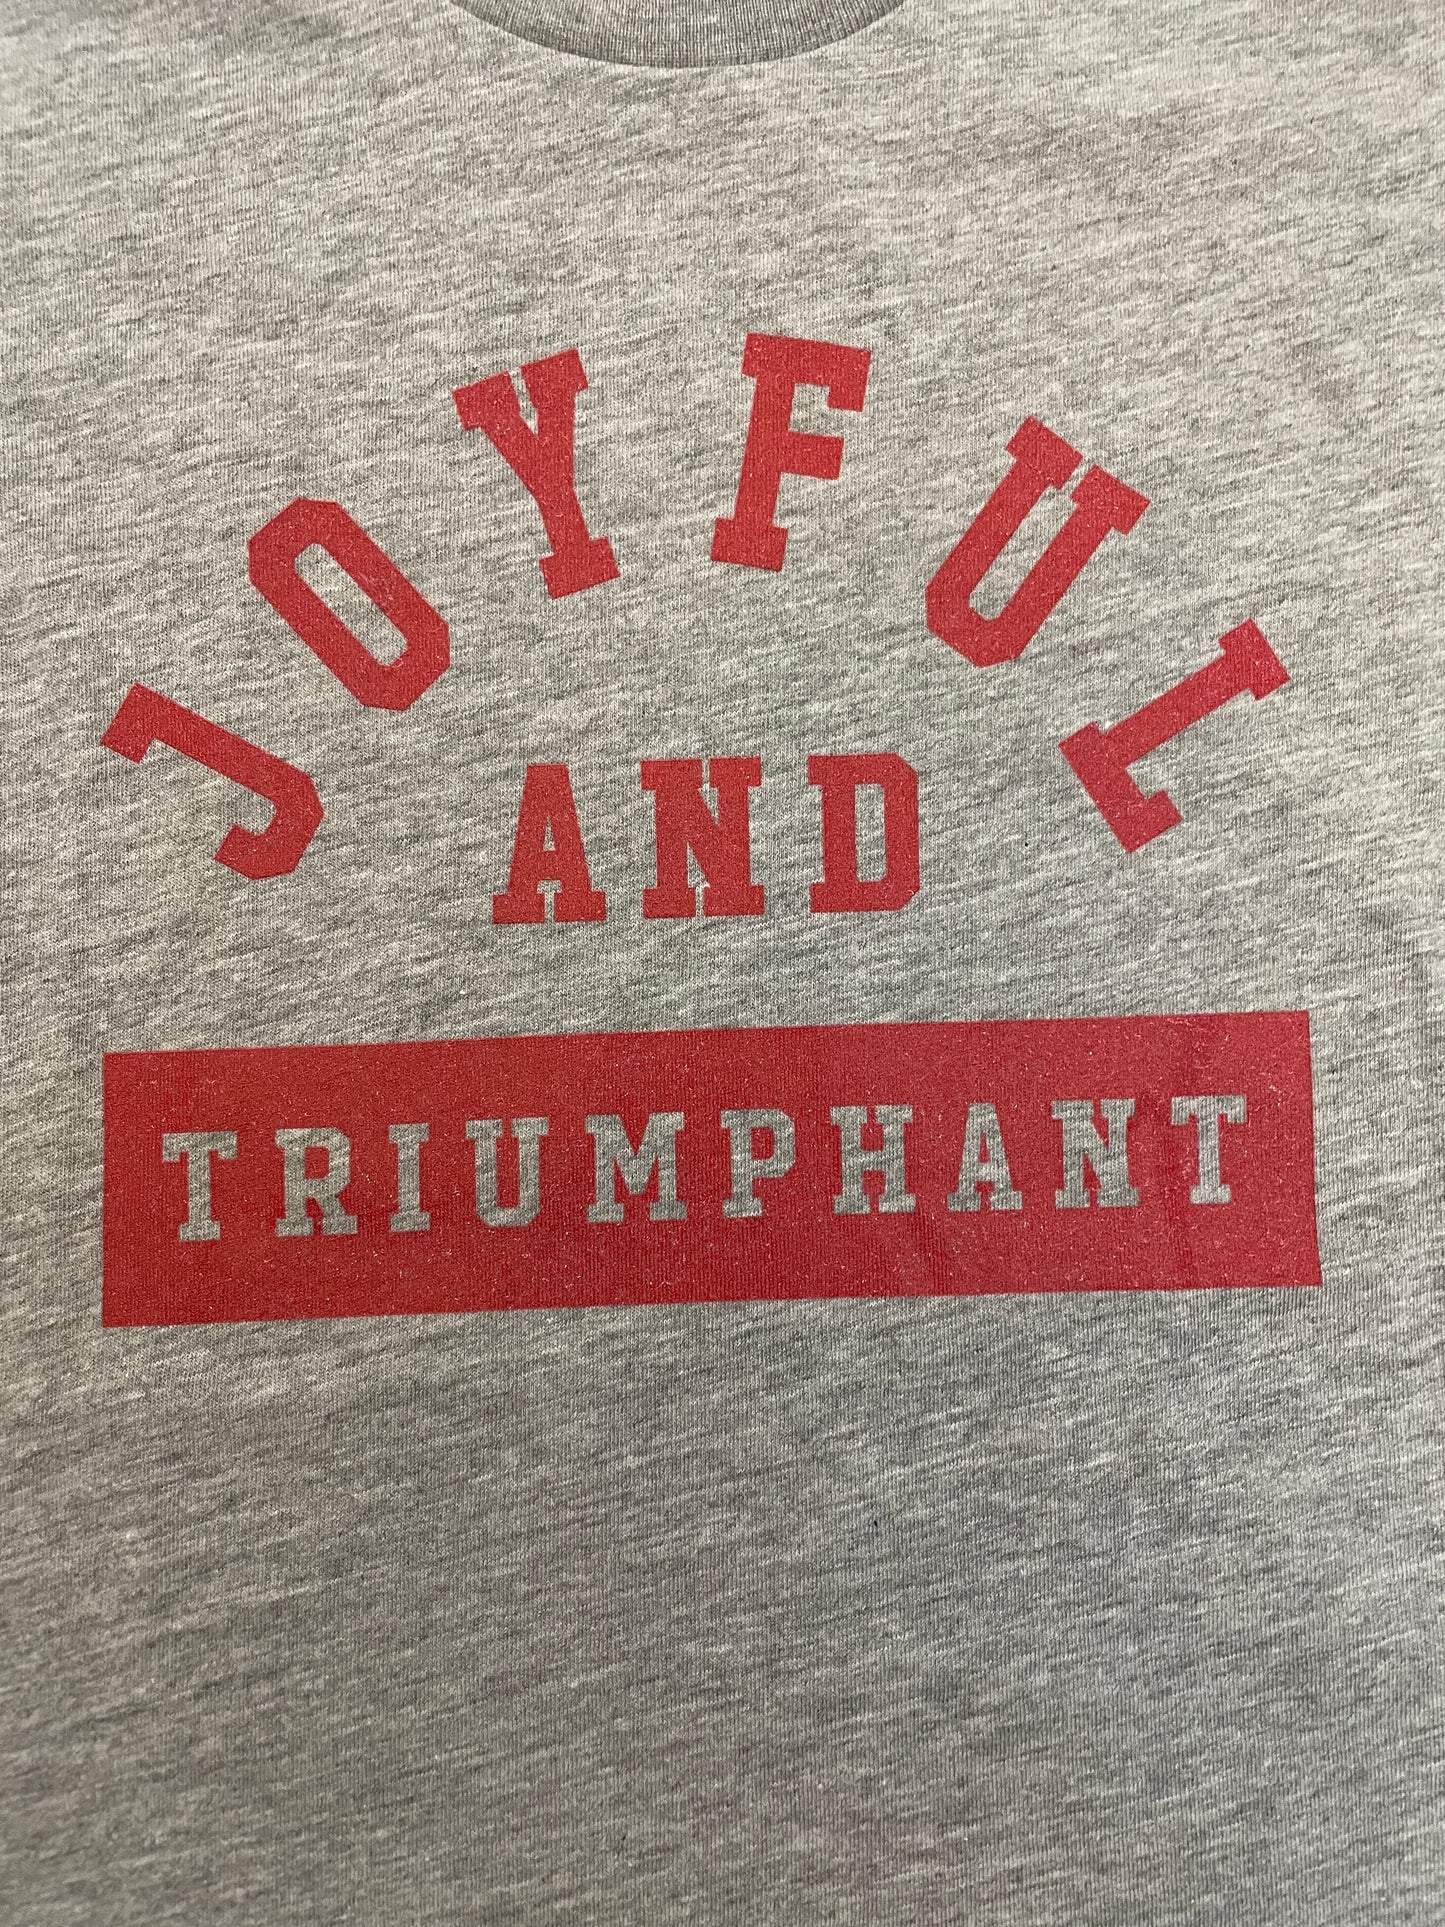 Joyful and Triumphant - Adult